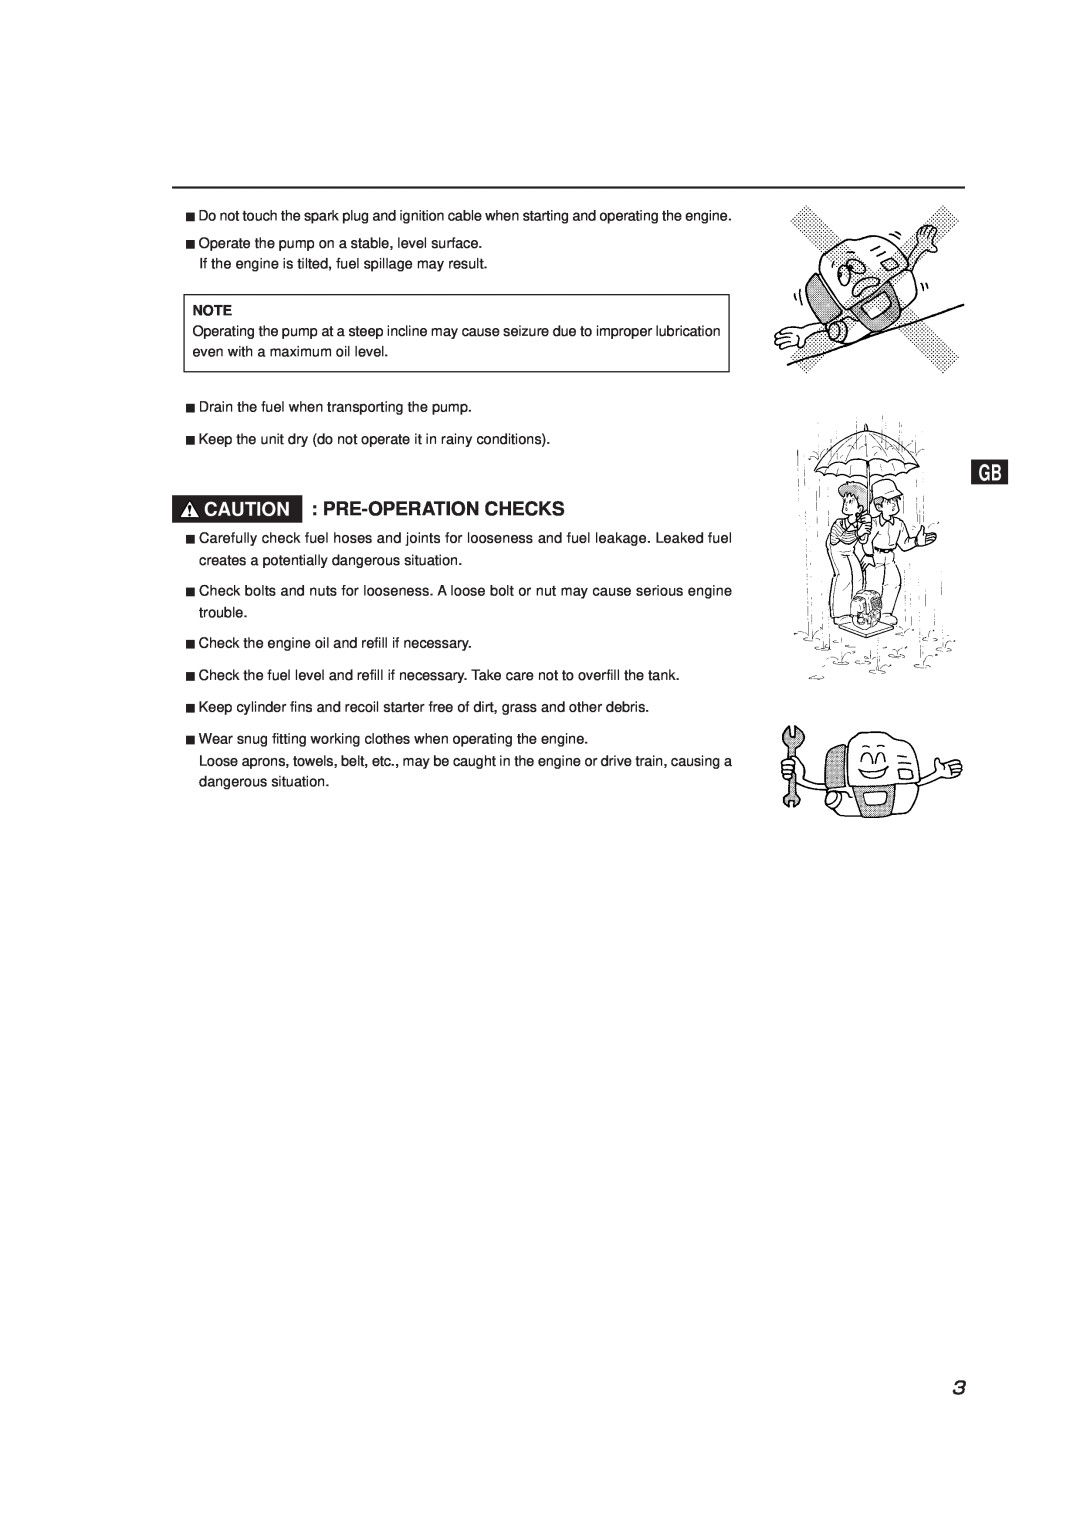 Subaru Robin Power Products PKV101 manual Caution Pre-Operationchecks 